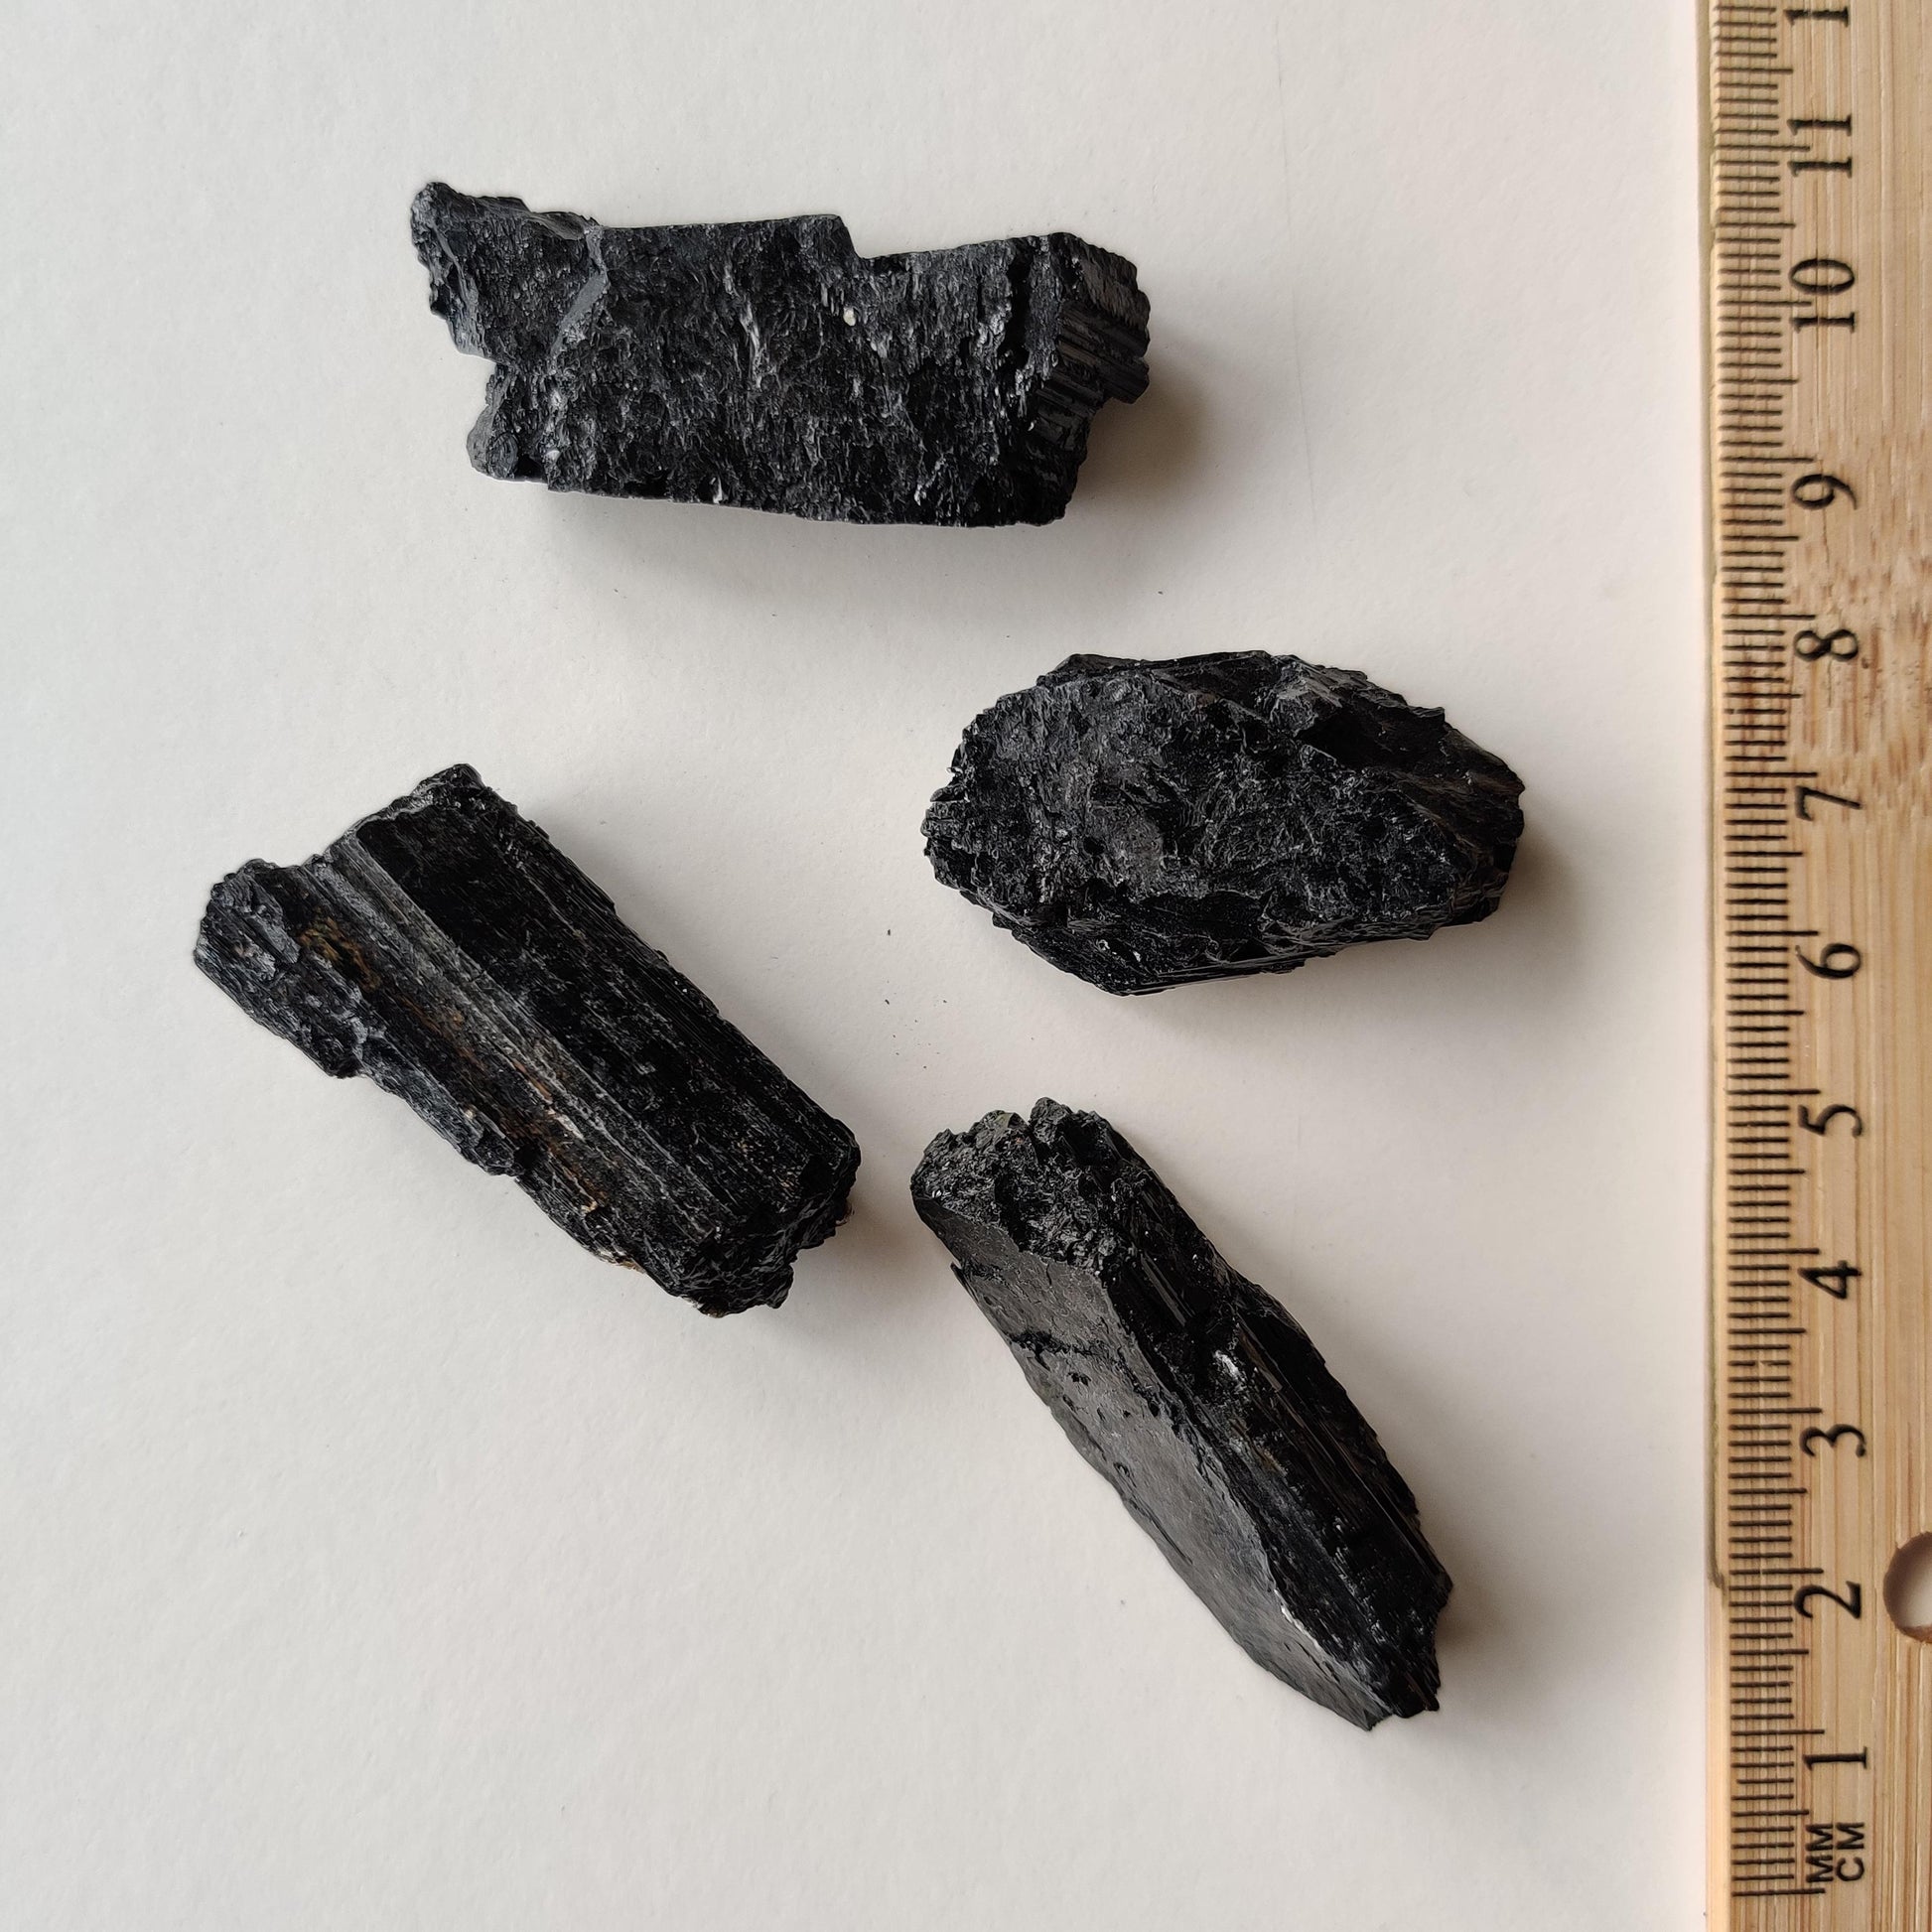 Black Tourmaline Crystal Piece (2-3 cm) - Rivendell Shop